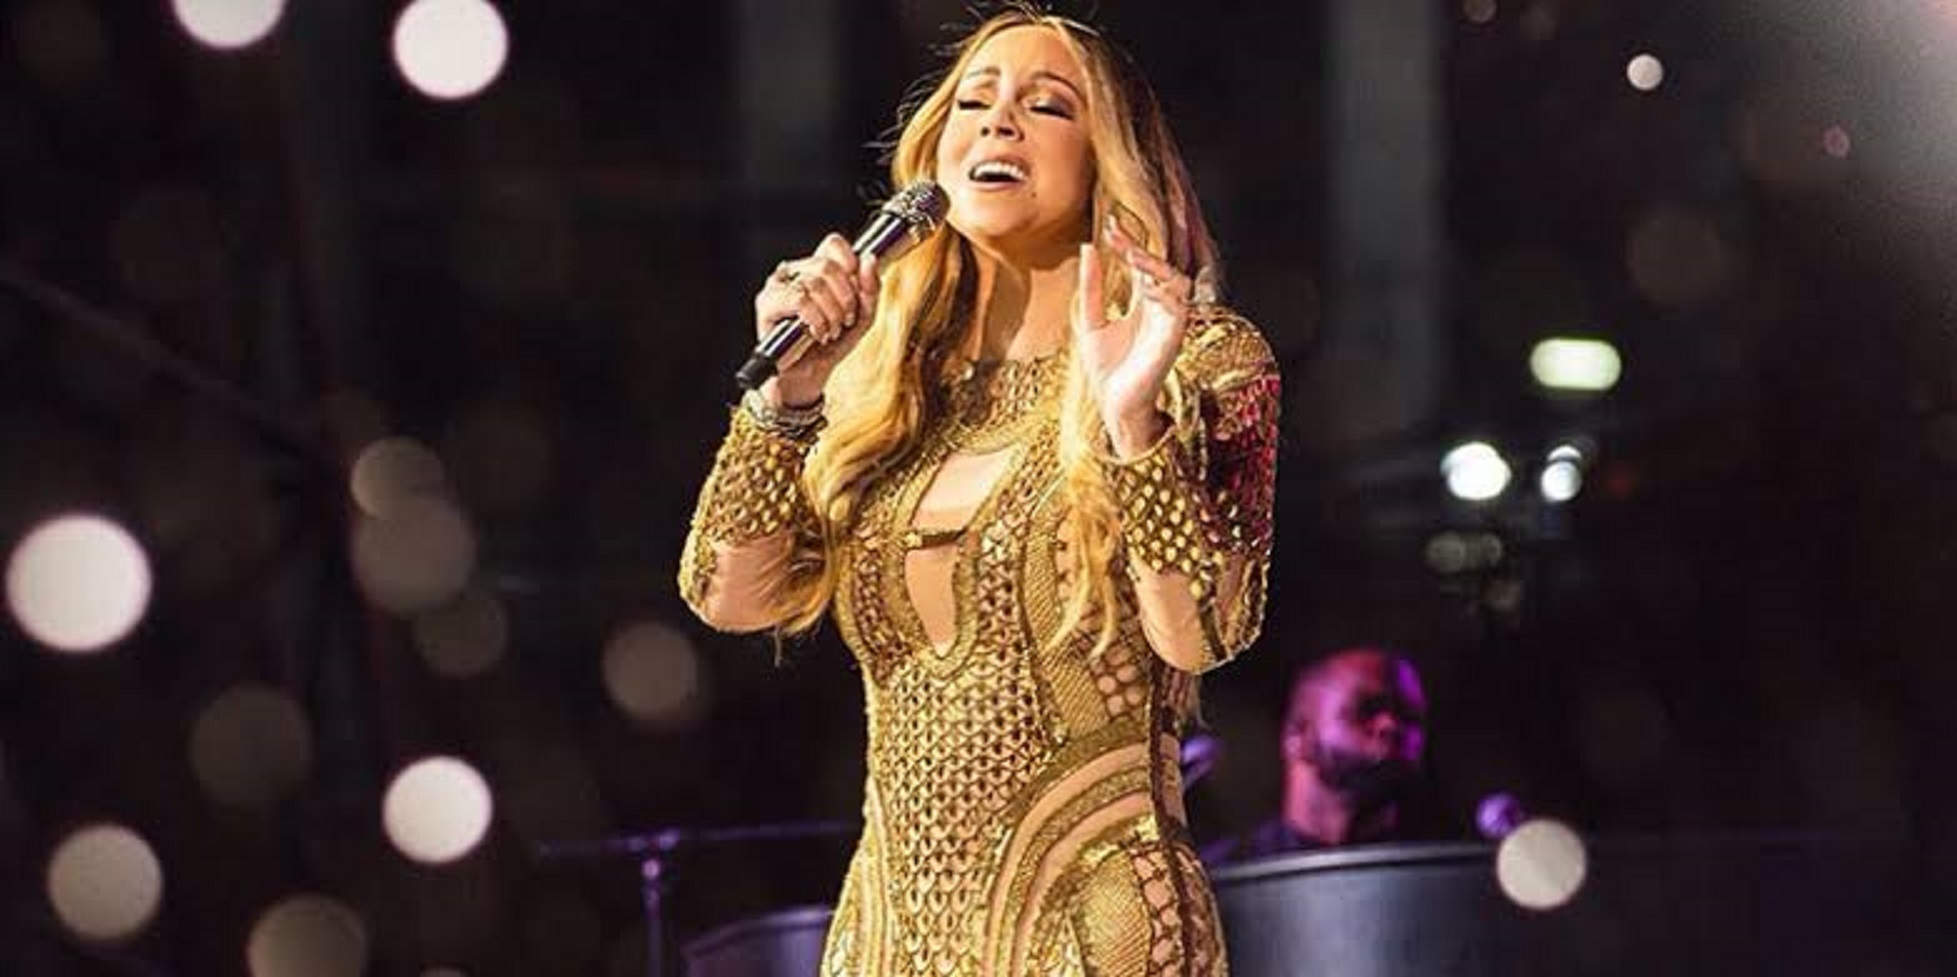 Watch: Mariah Carey Performs ‘We Belong Together’ in Dubai